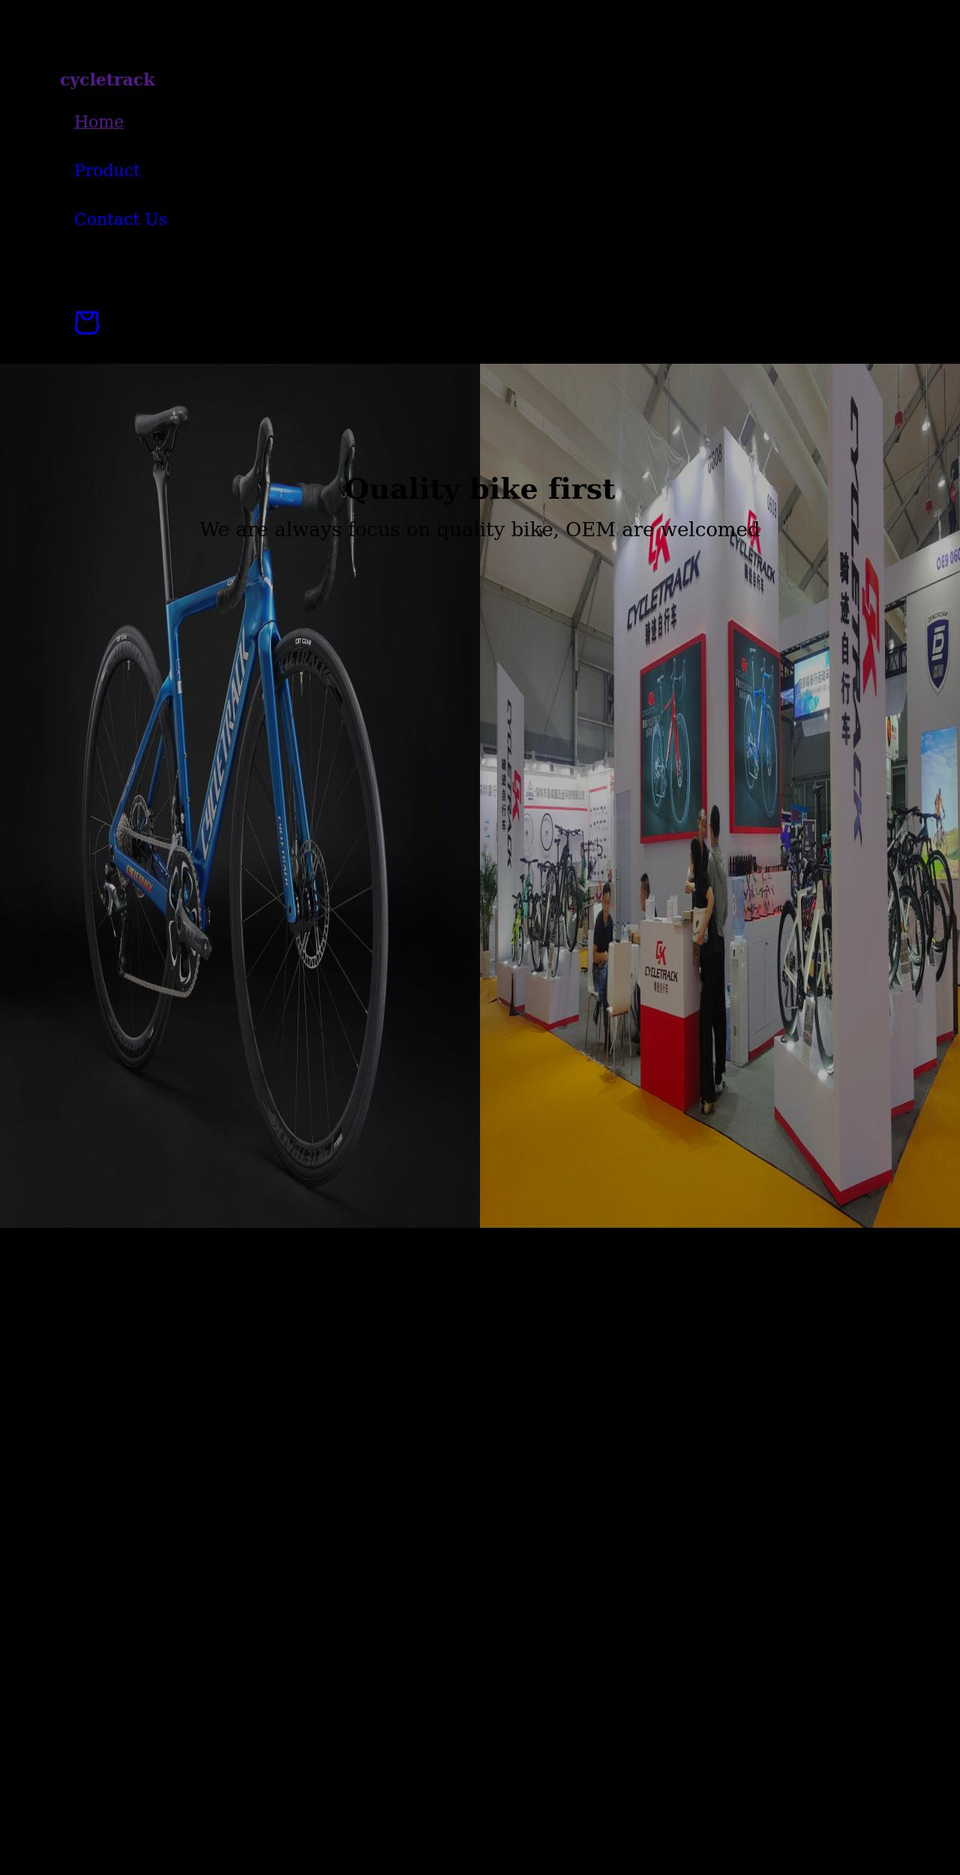 cycletrack.cn shopify website screenshot